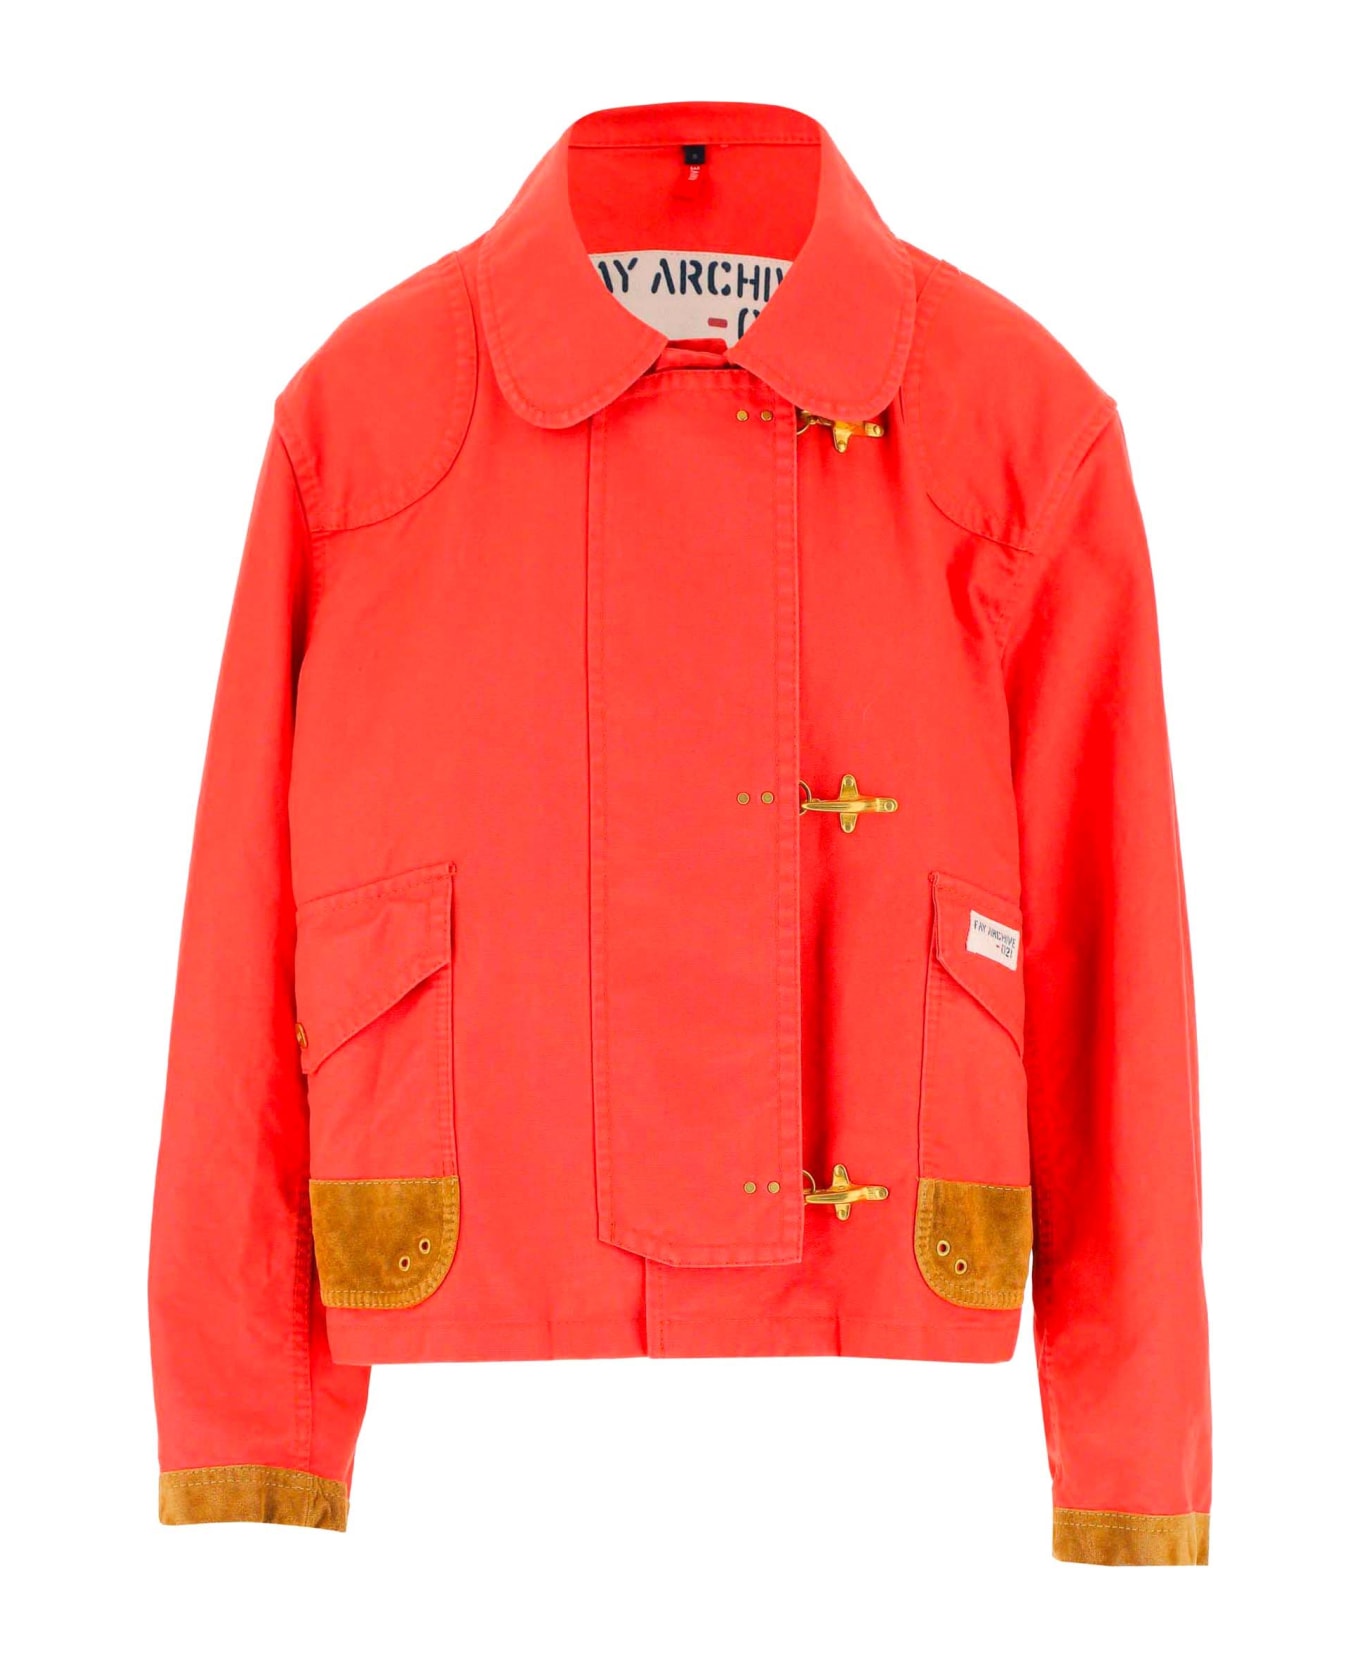 Fay Orange Cotton Jacket - ROSSO